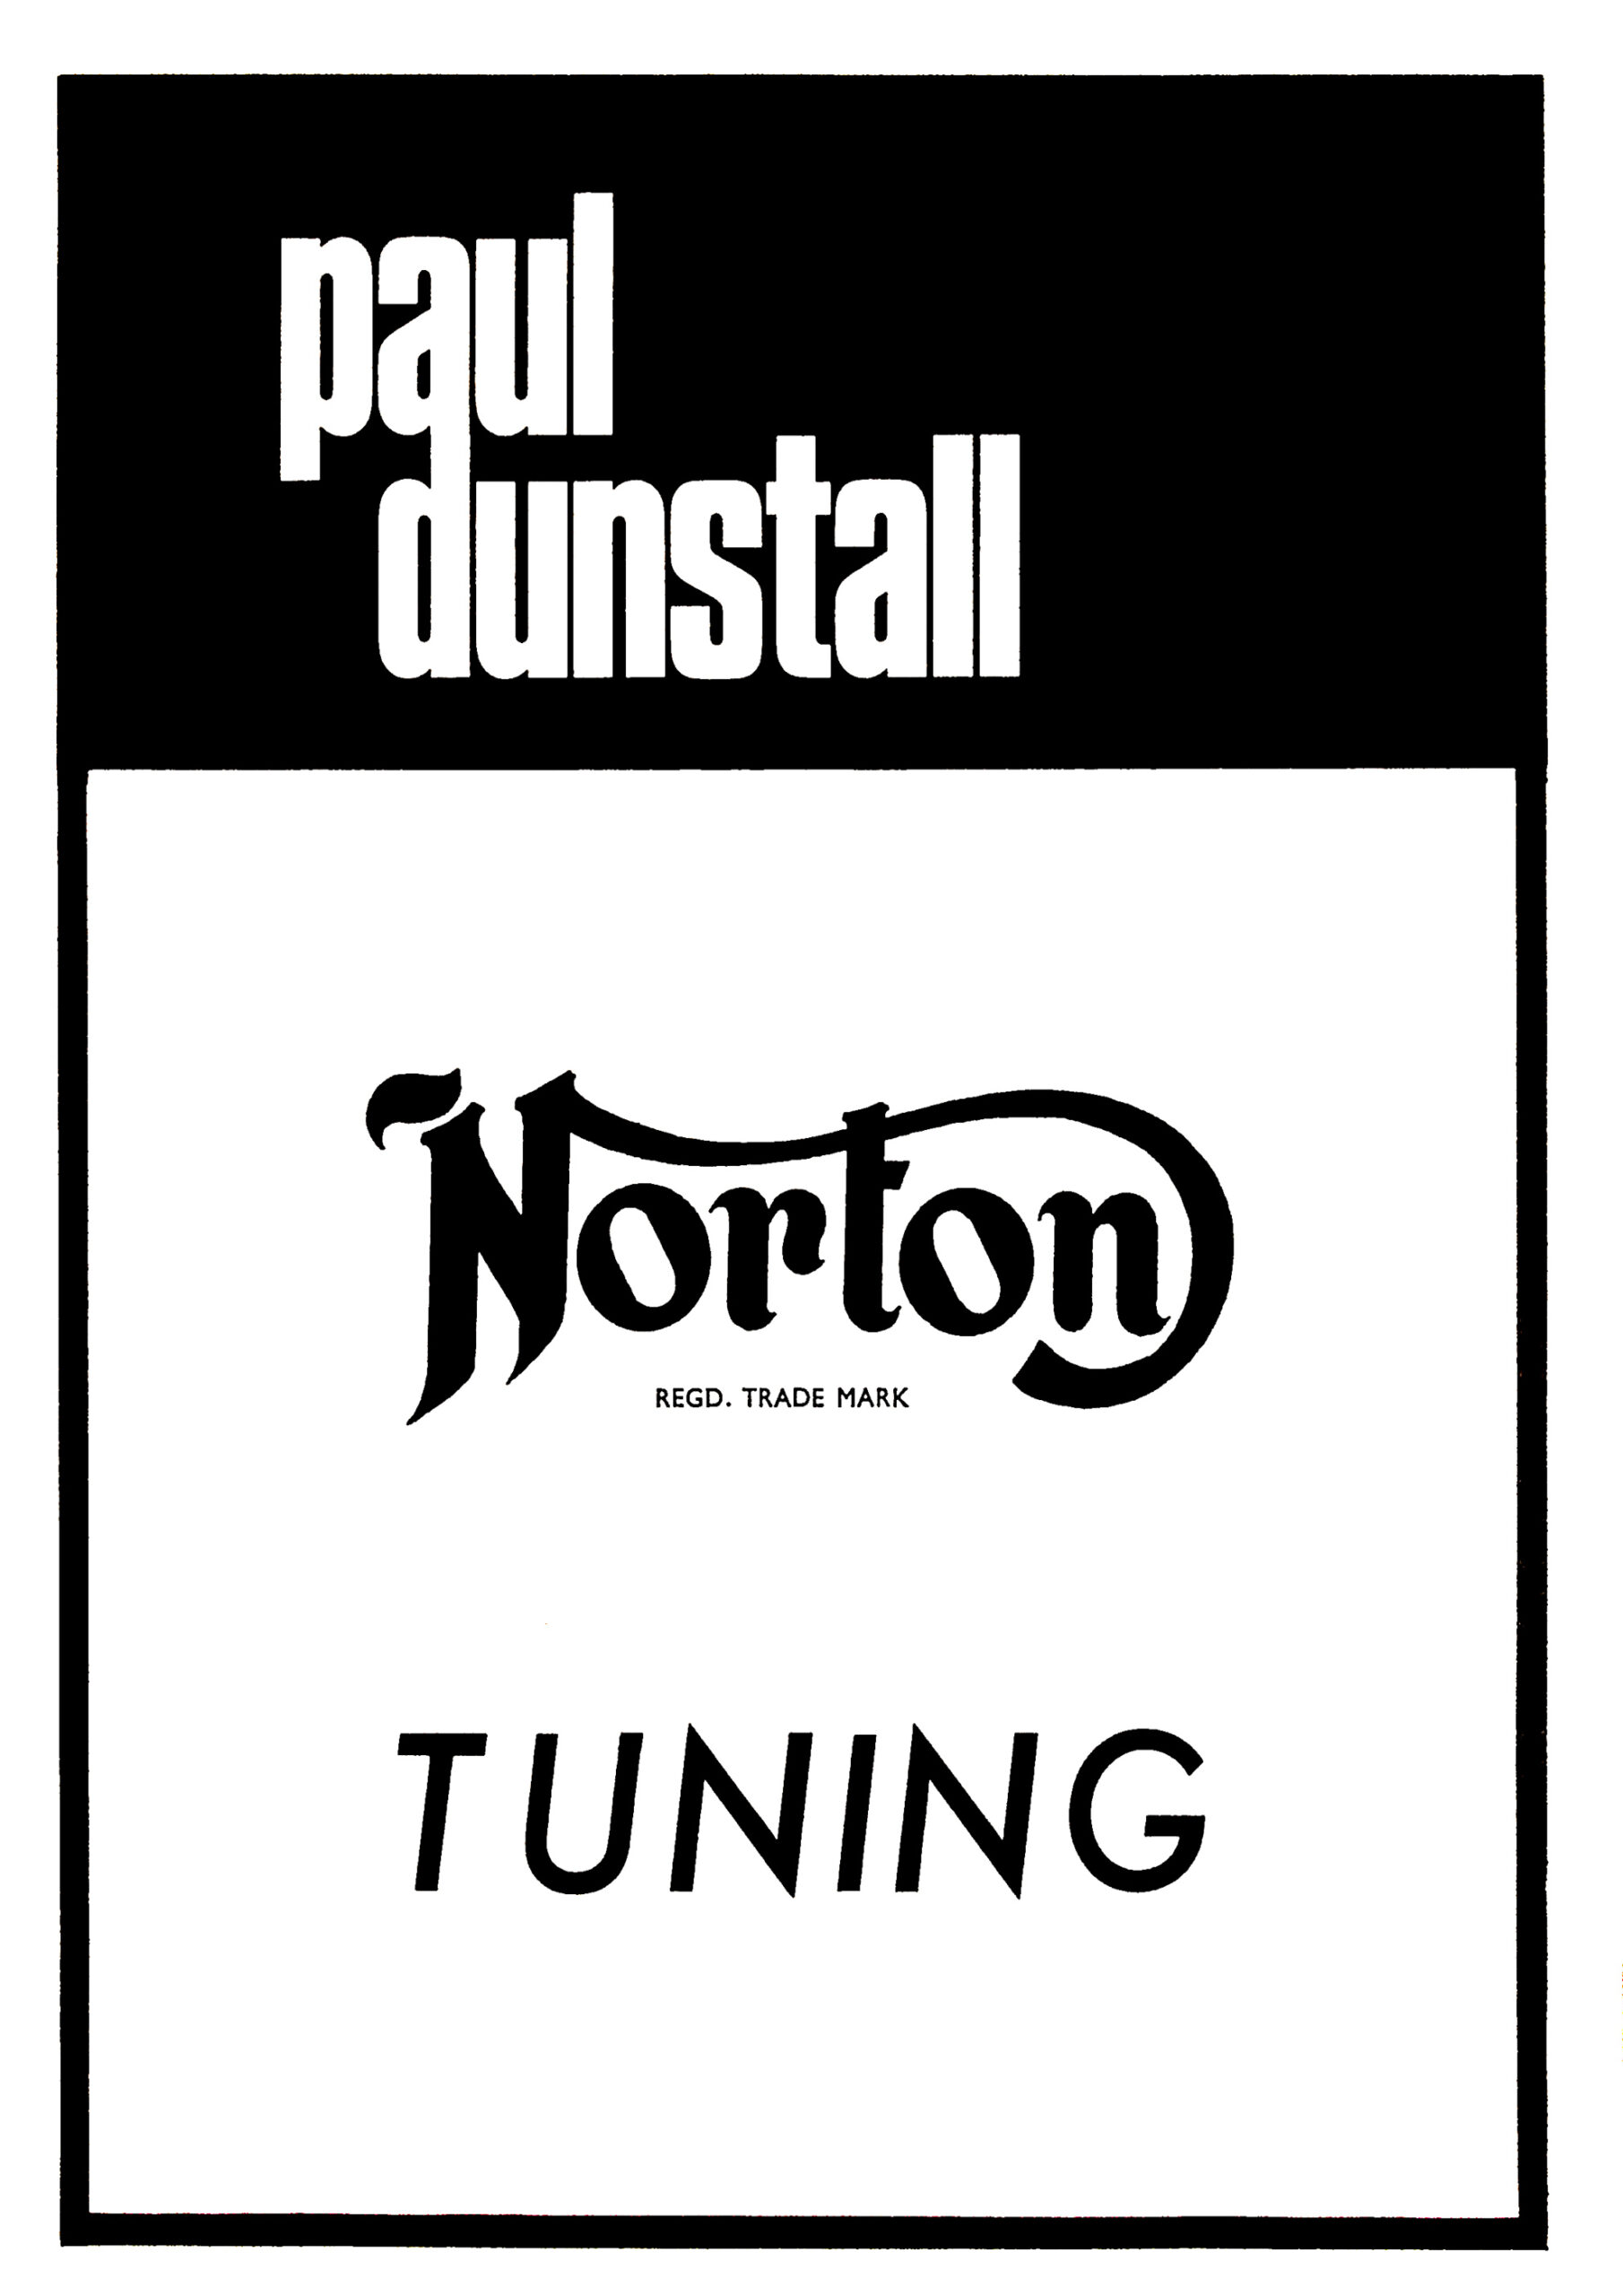 Paul Dunstall Norton Tuning